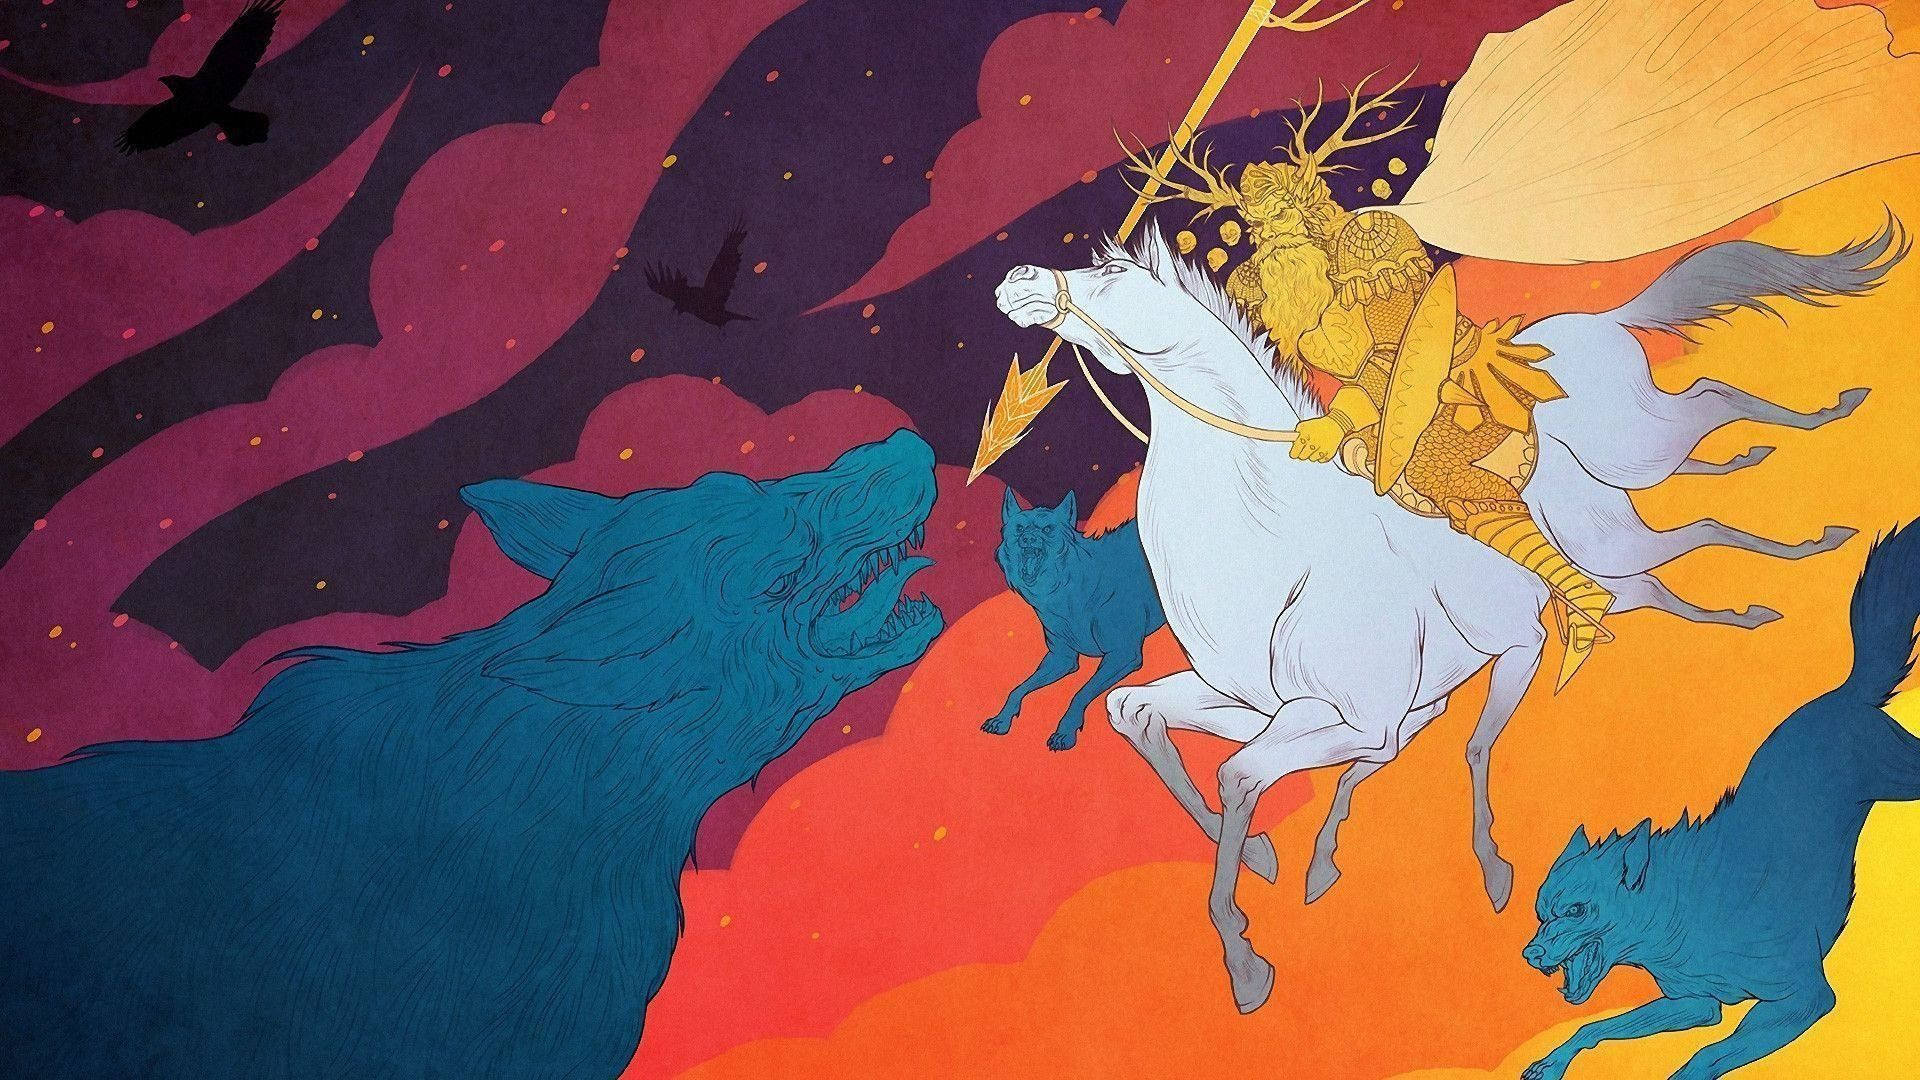 Colorful Norse Digital Art Wallpaper